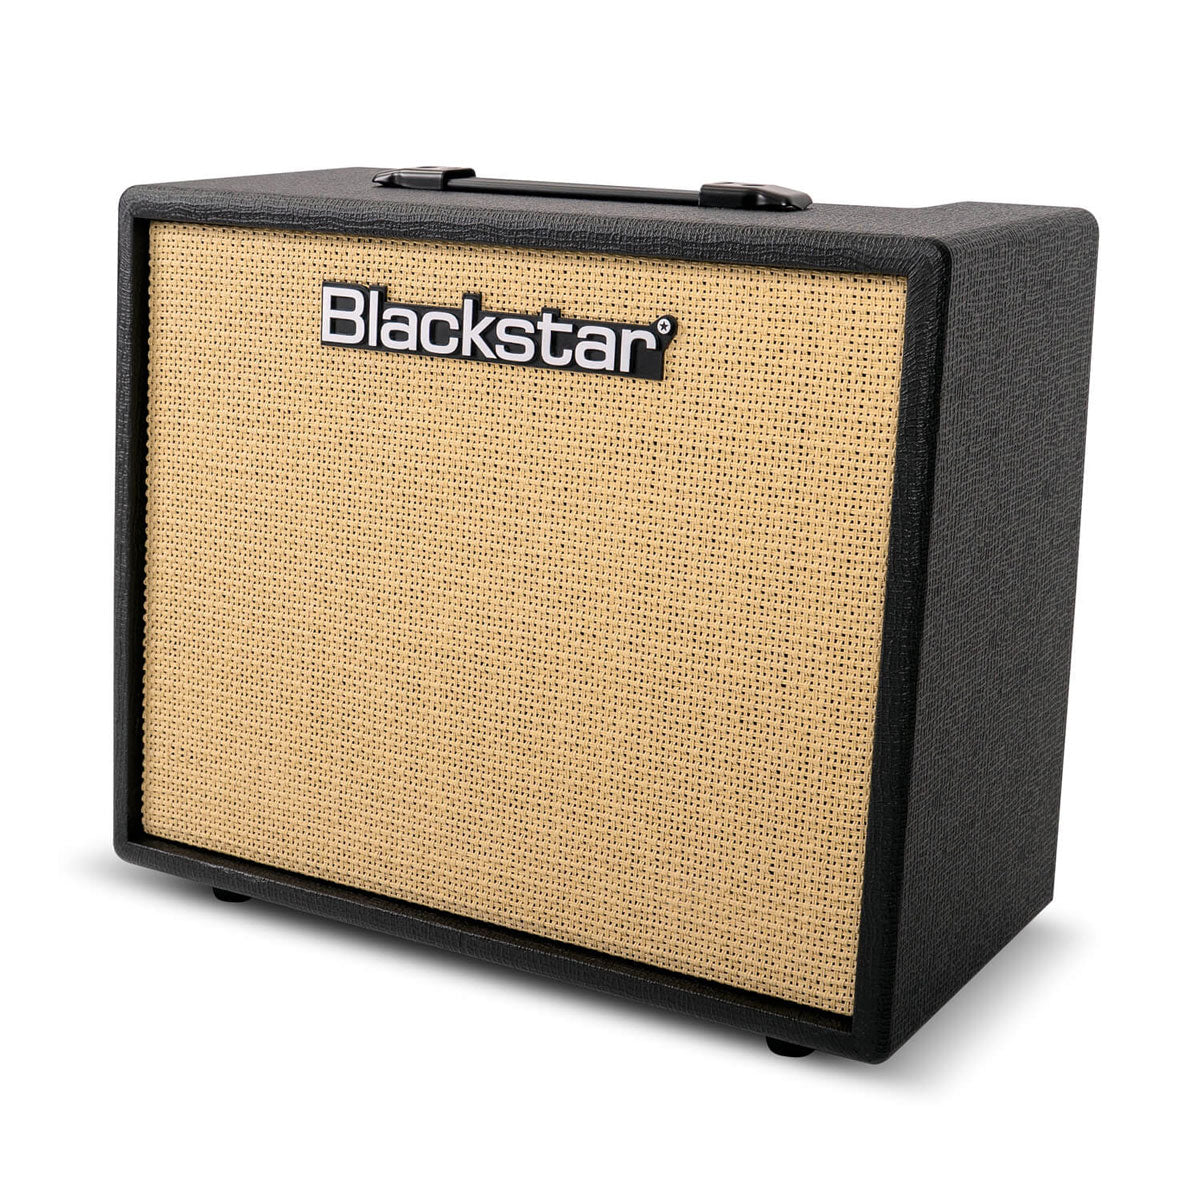 Blackstar Debut 50R 1x12 Inch 50 Watt Guitar Combo Amplifier